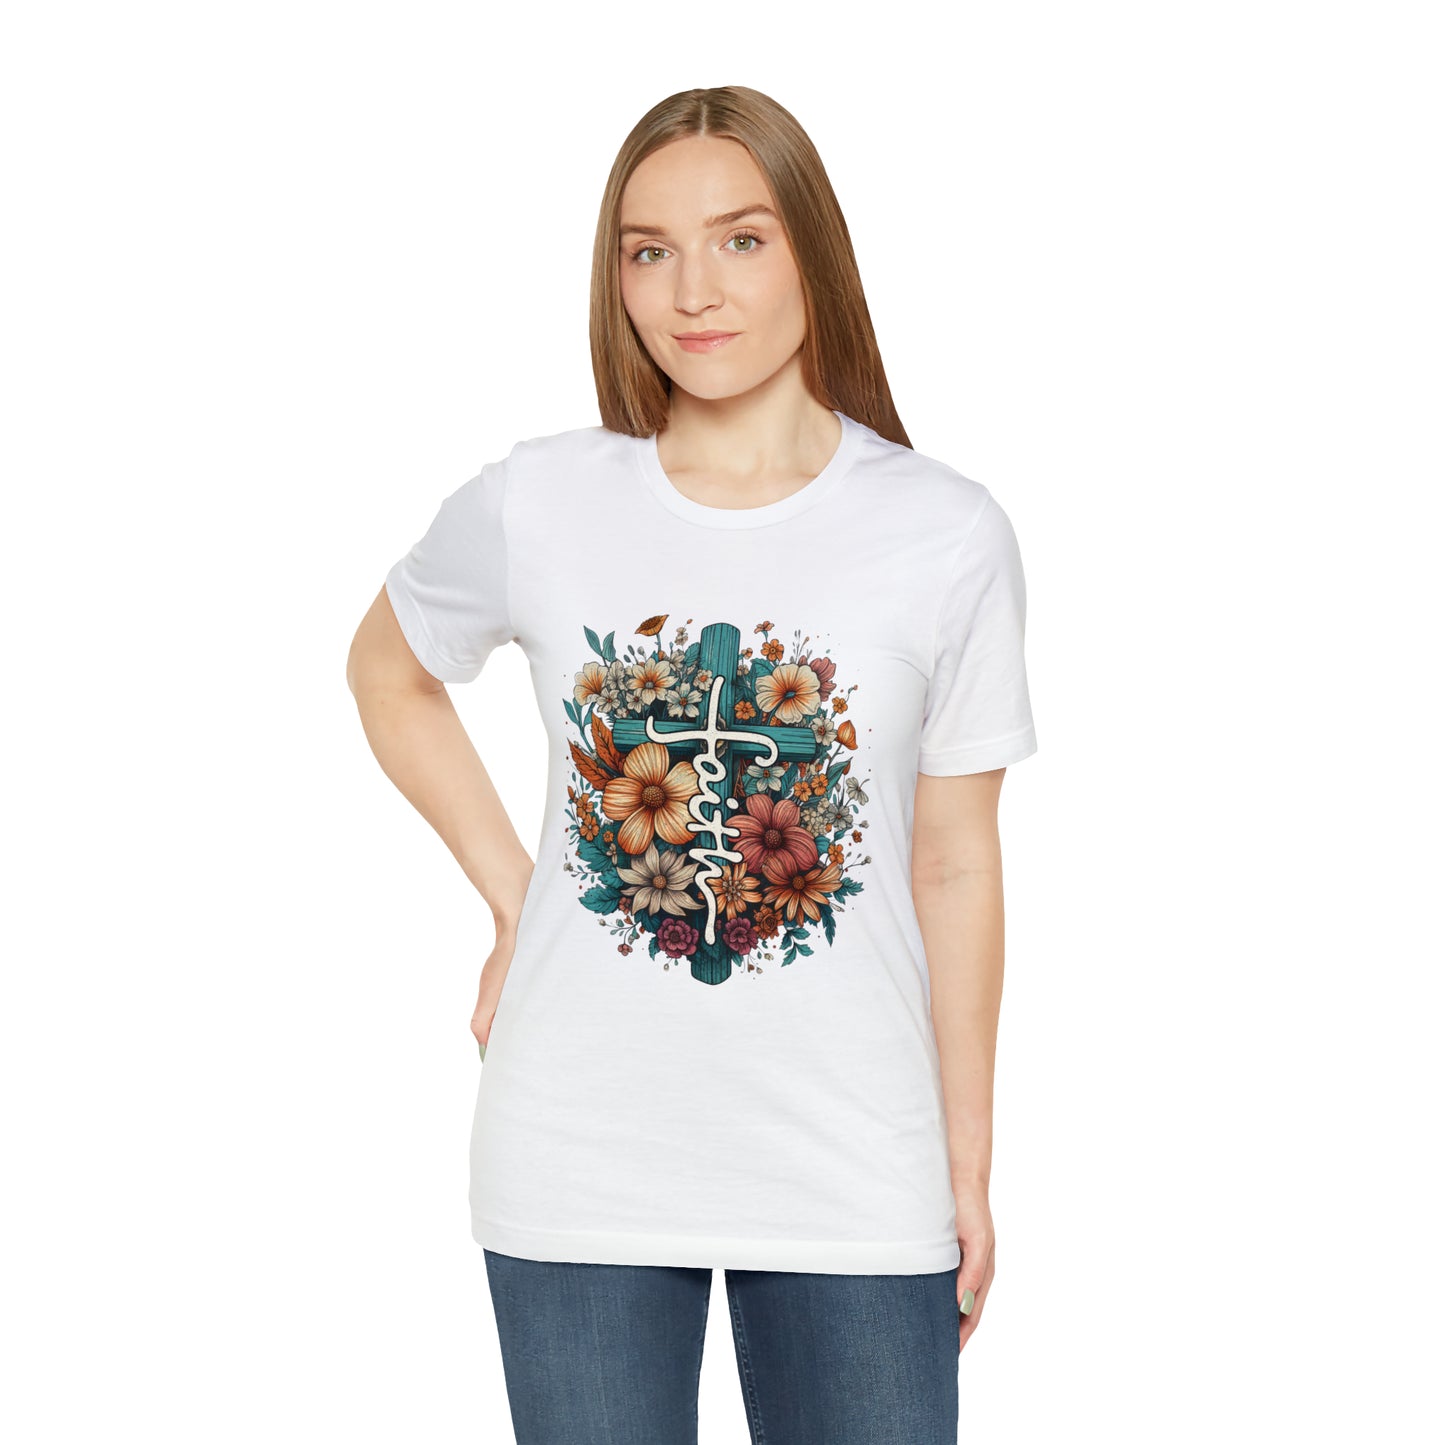 Faith with Flowers - Jersey Short Sleeve T-Shirt